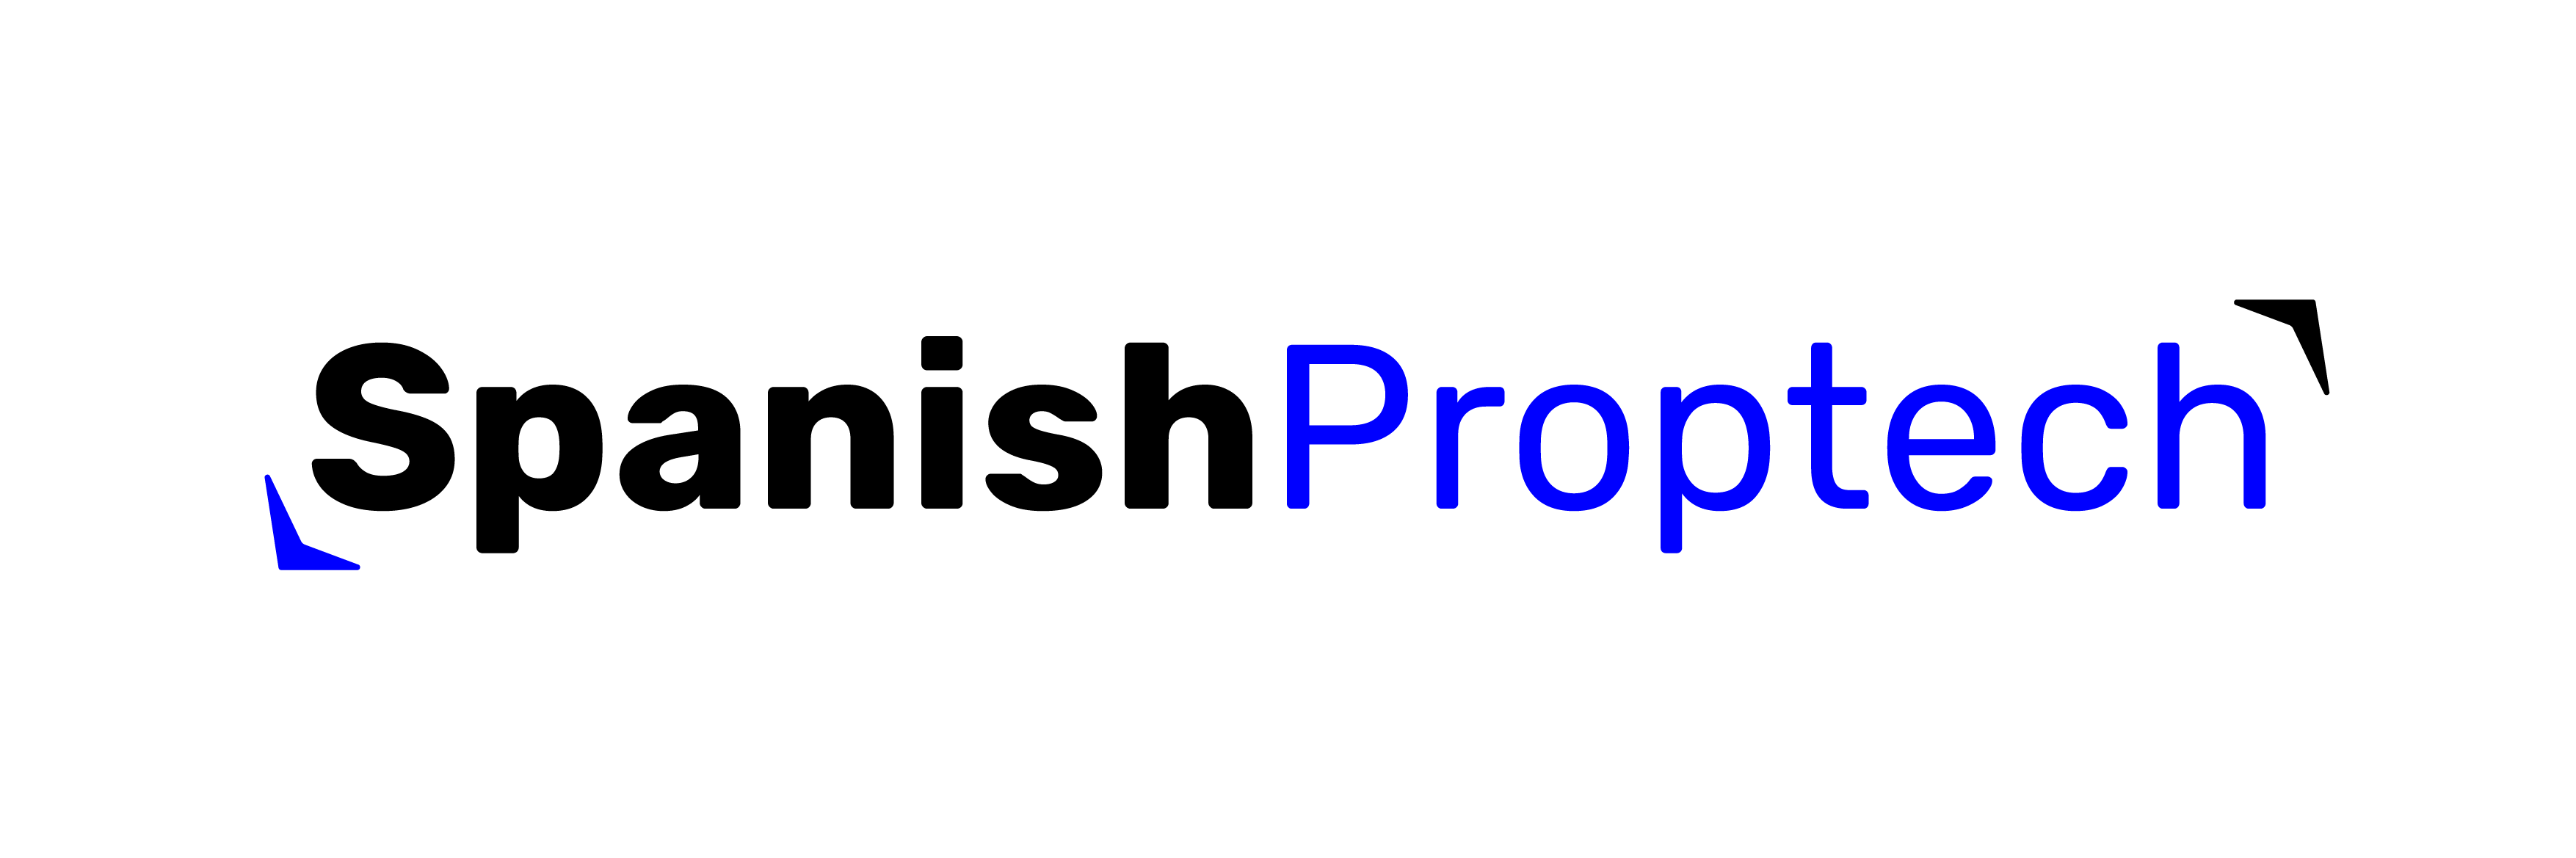 spanishProptech_logo